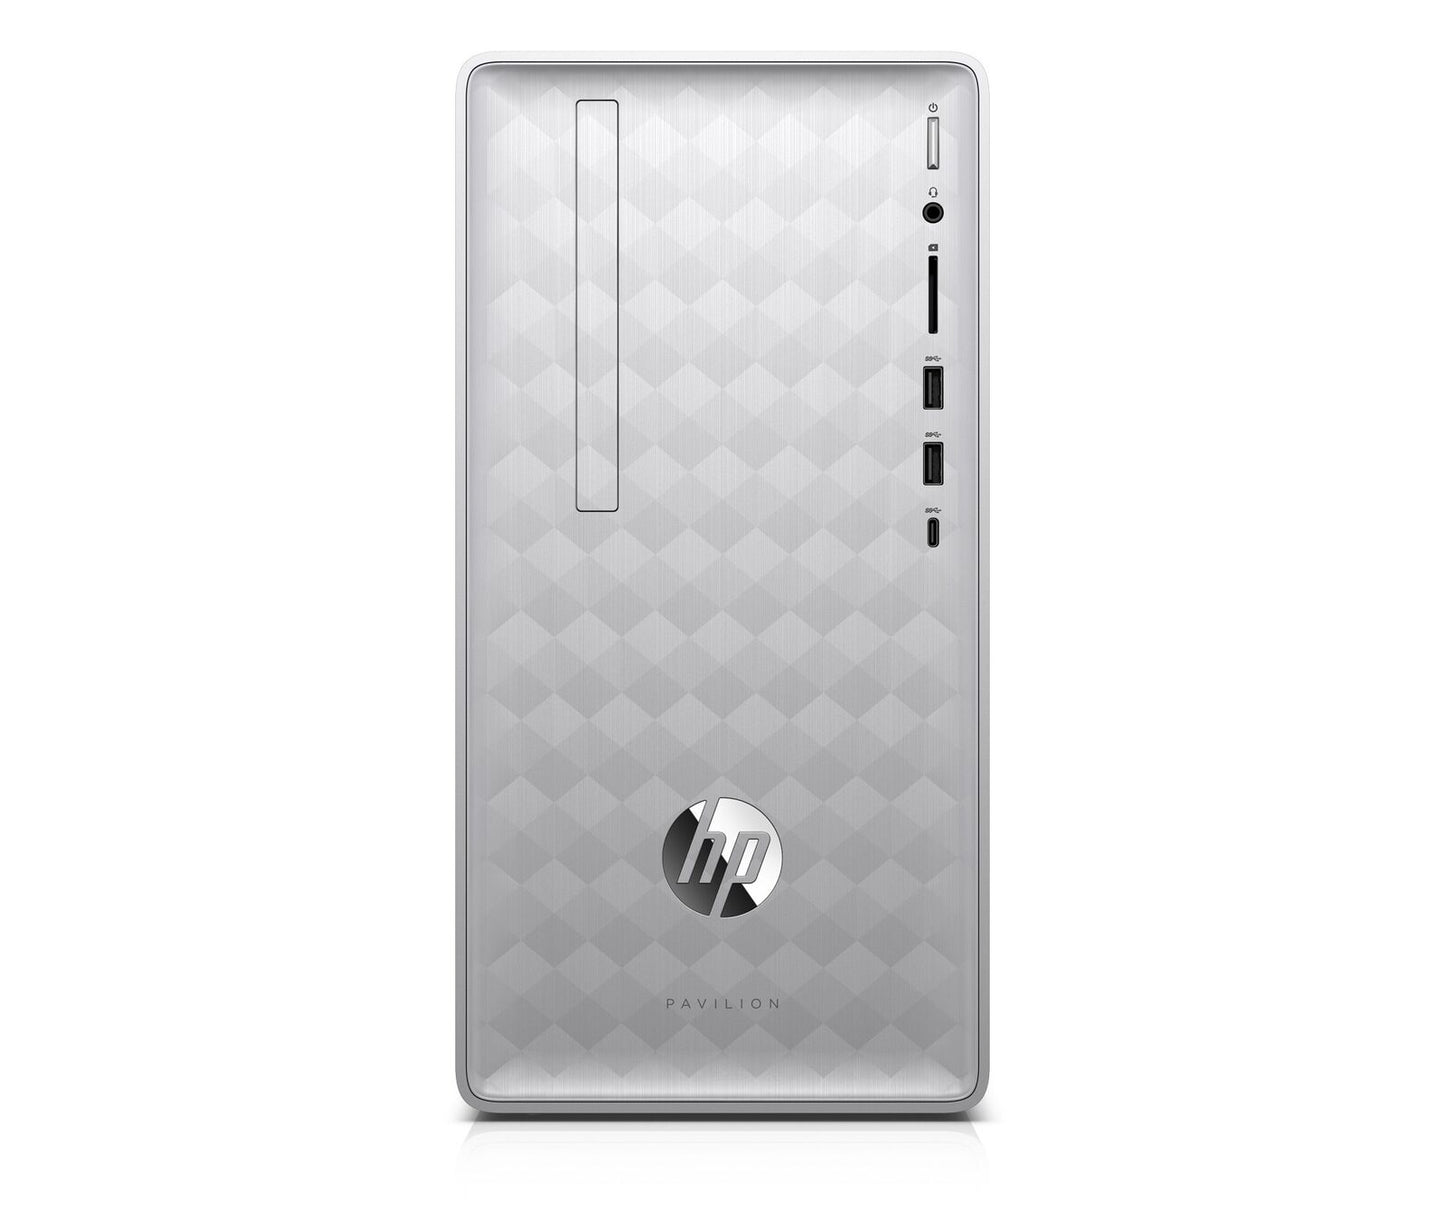 HP Pavilion 590-p0047c Intel i7 - Rekes Sales